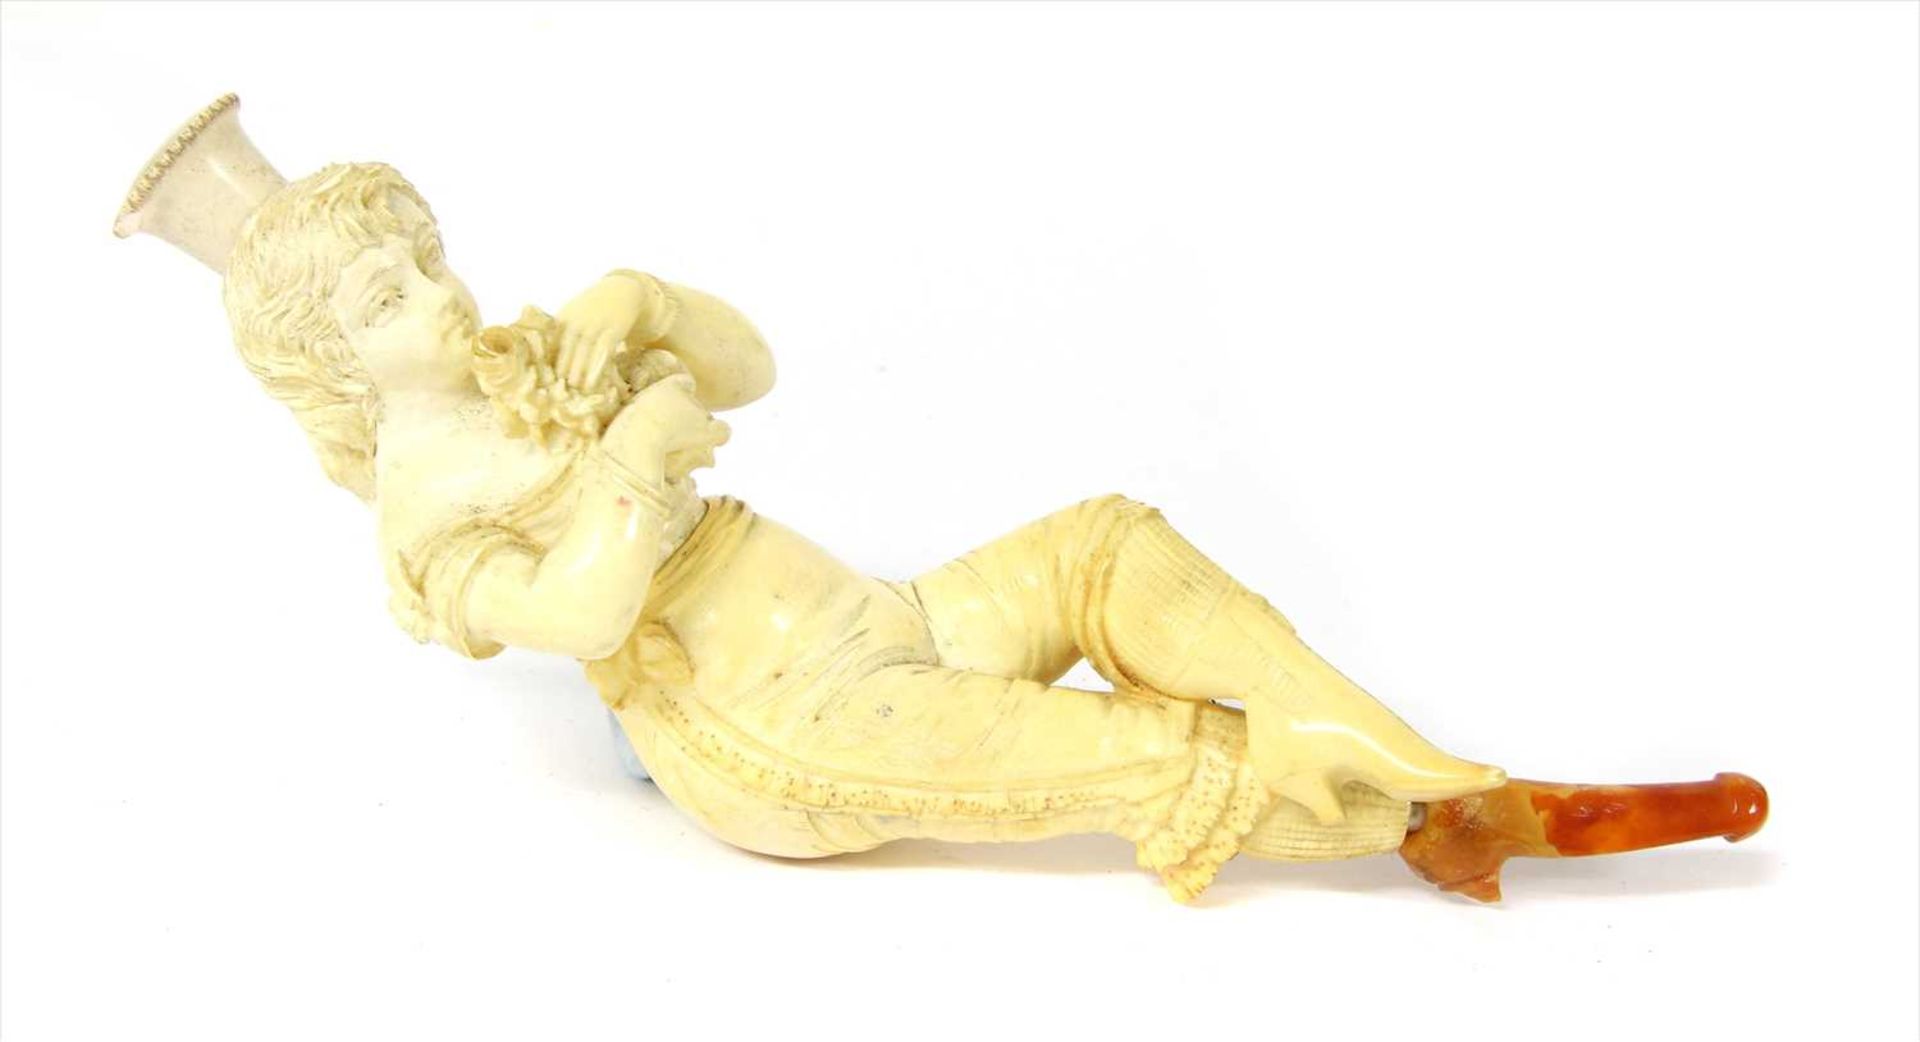 An erotic meerschaum combined cheroot holder and pipe, - Image 3 of 3